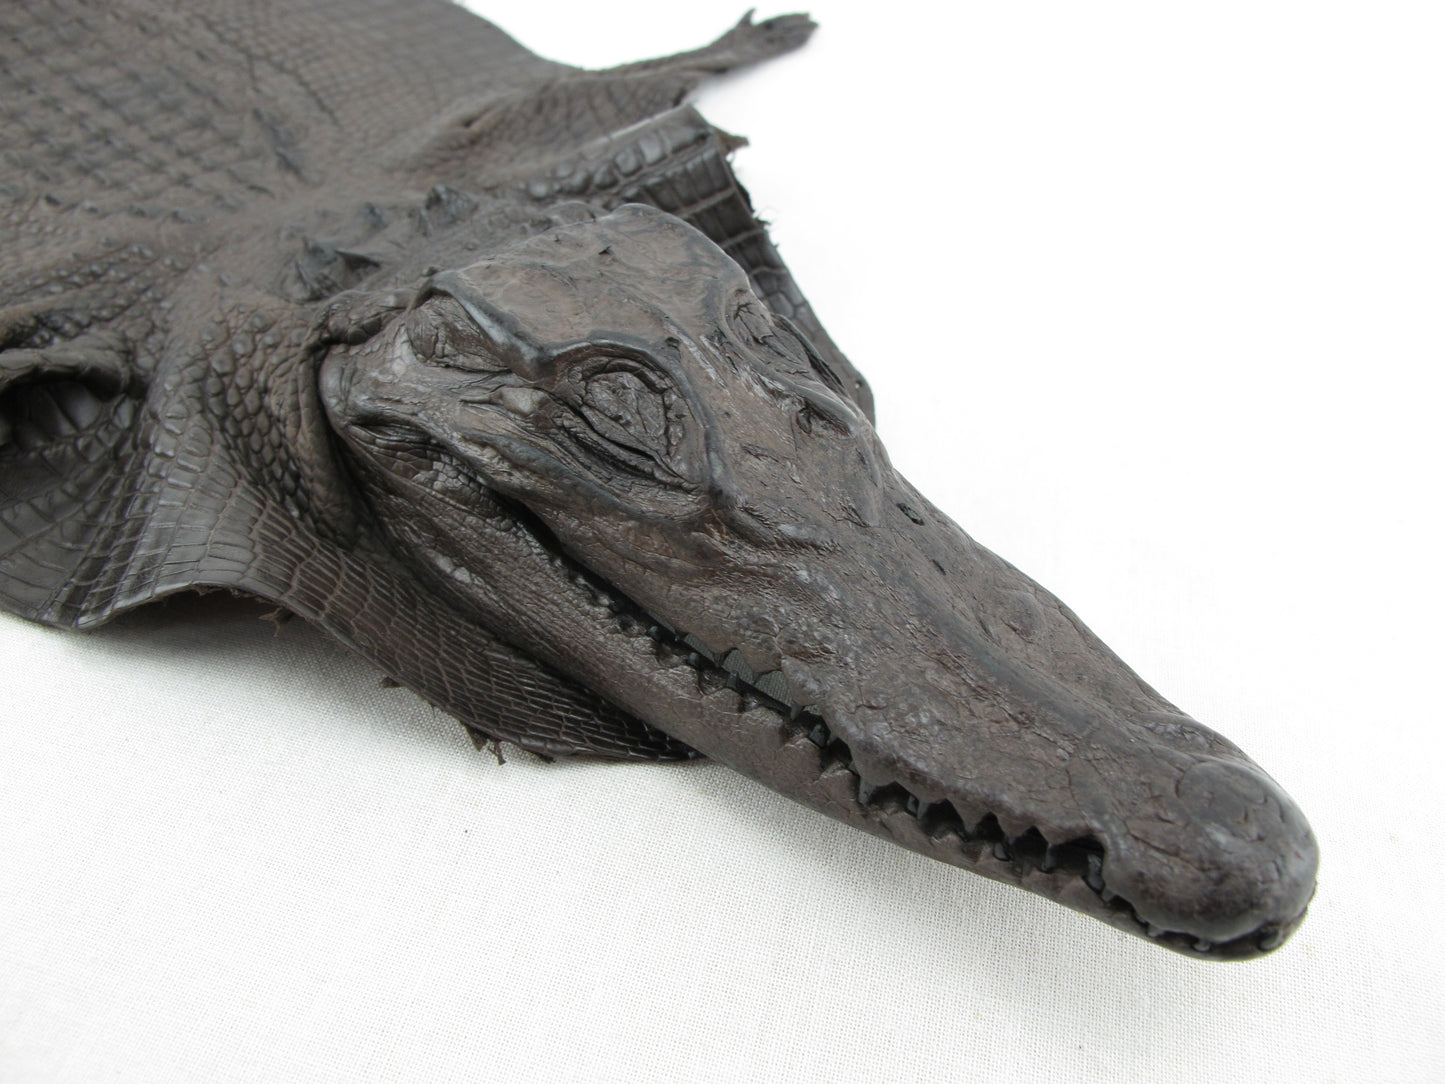 Genuine Crocodile Leather Bags Siamensis Crocodile Skin